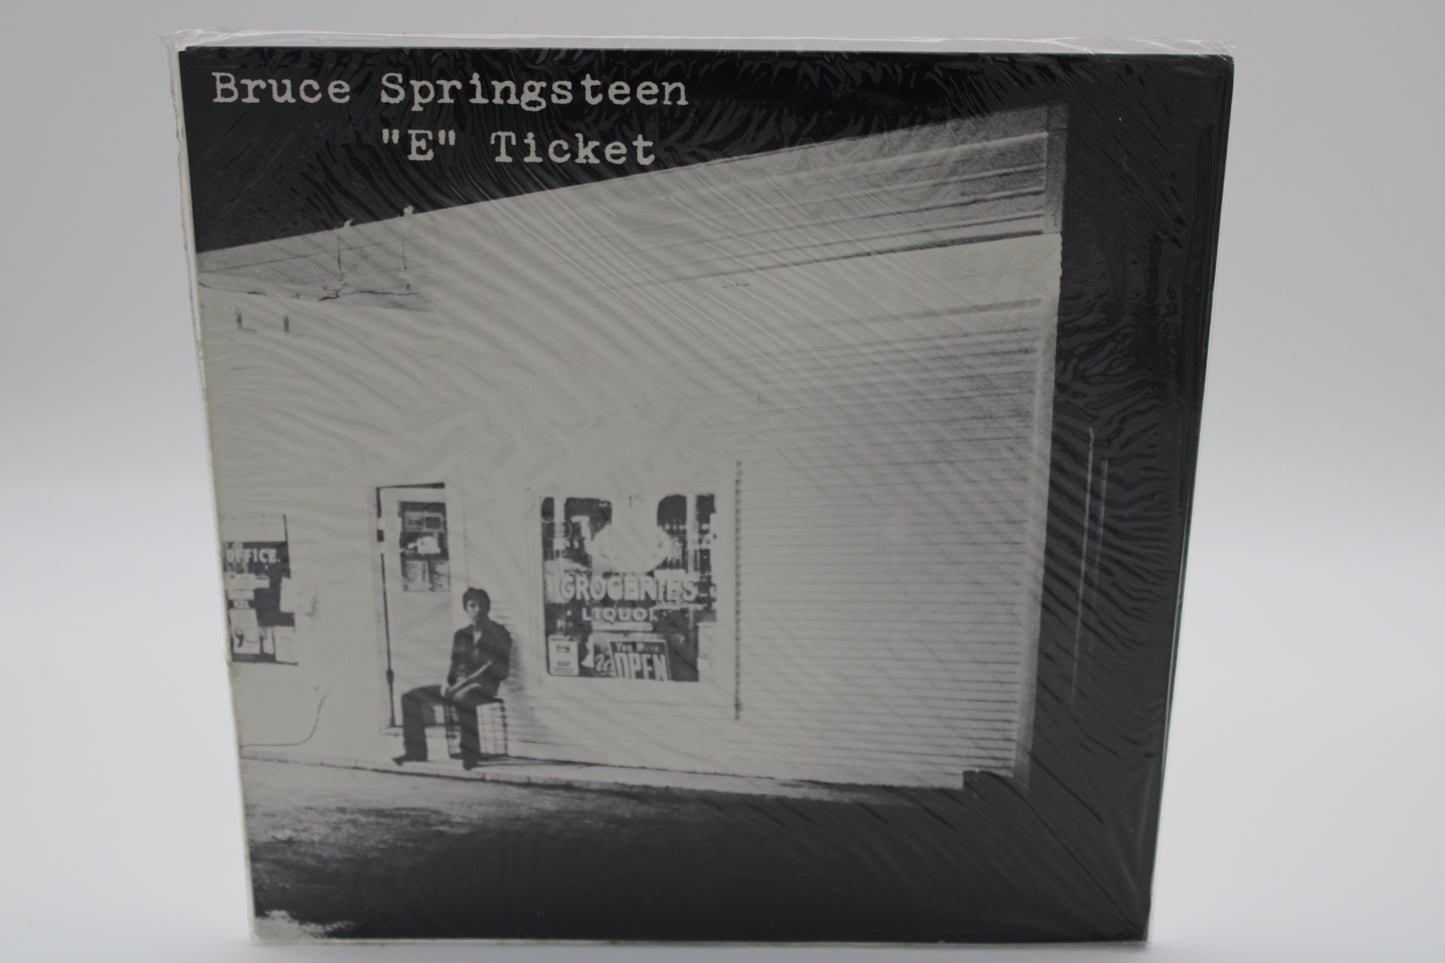 Bruce Springsteen - SEALED "E Ticket" Vinyl Album 1975 - Import Germany - BLV